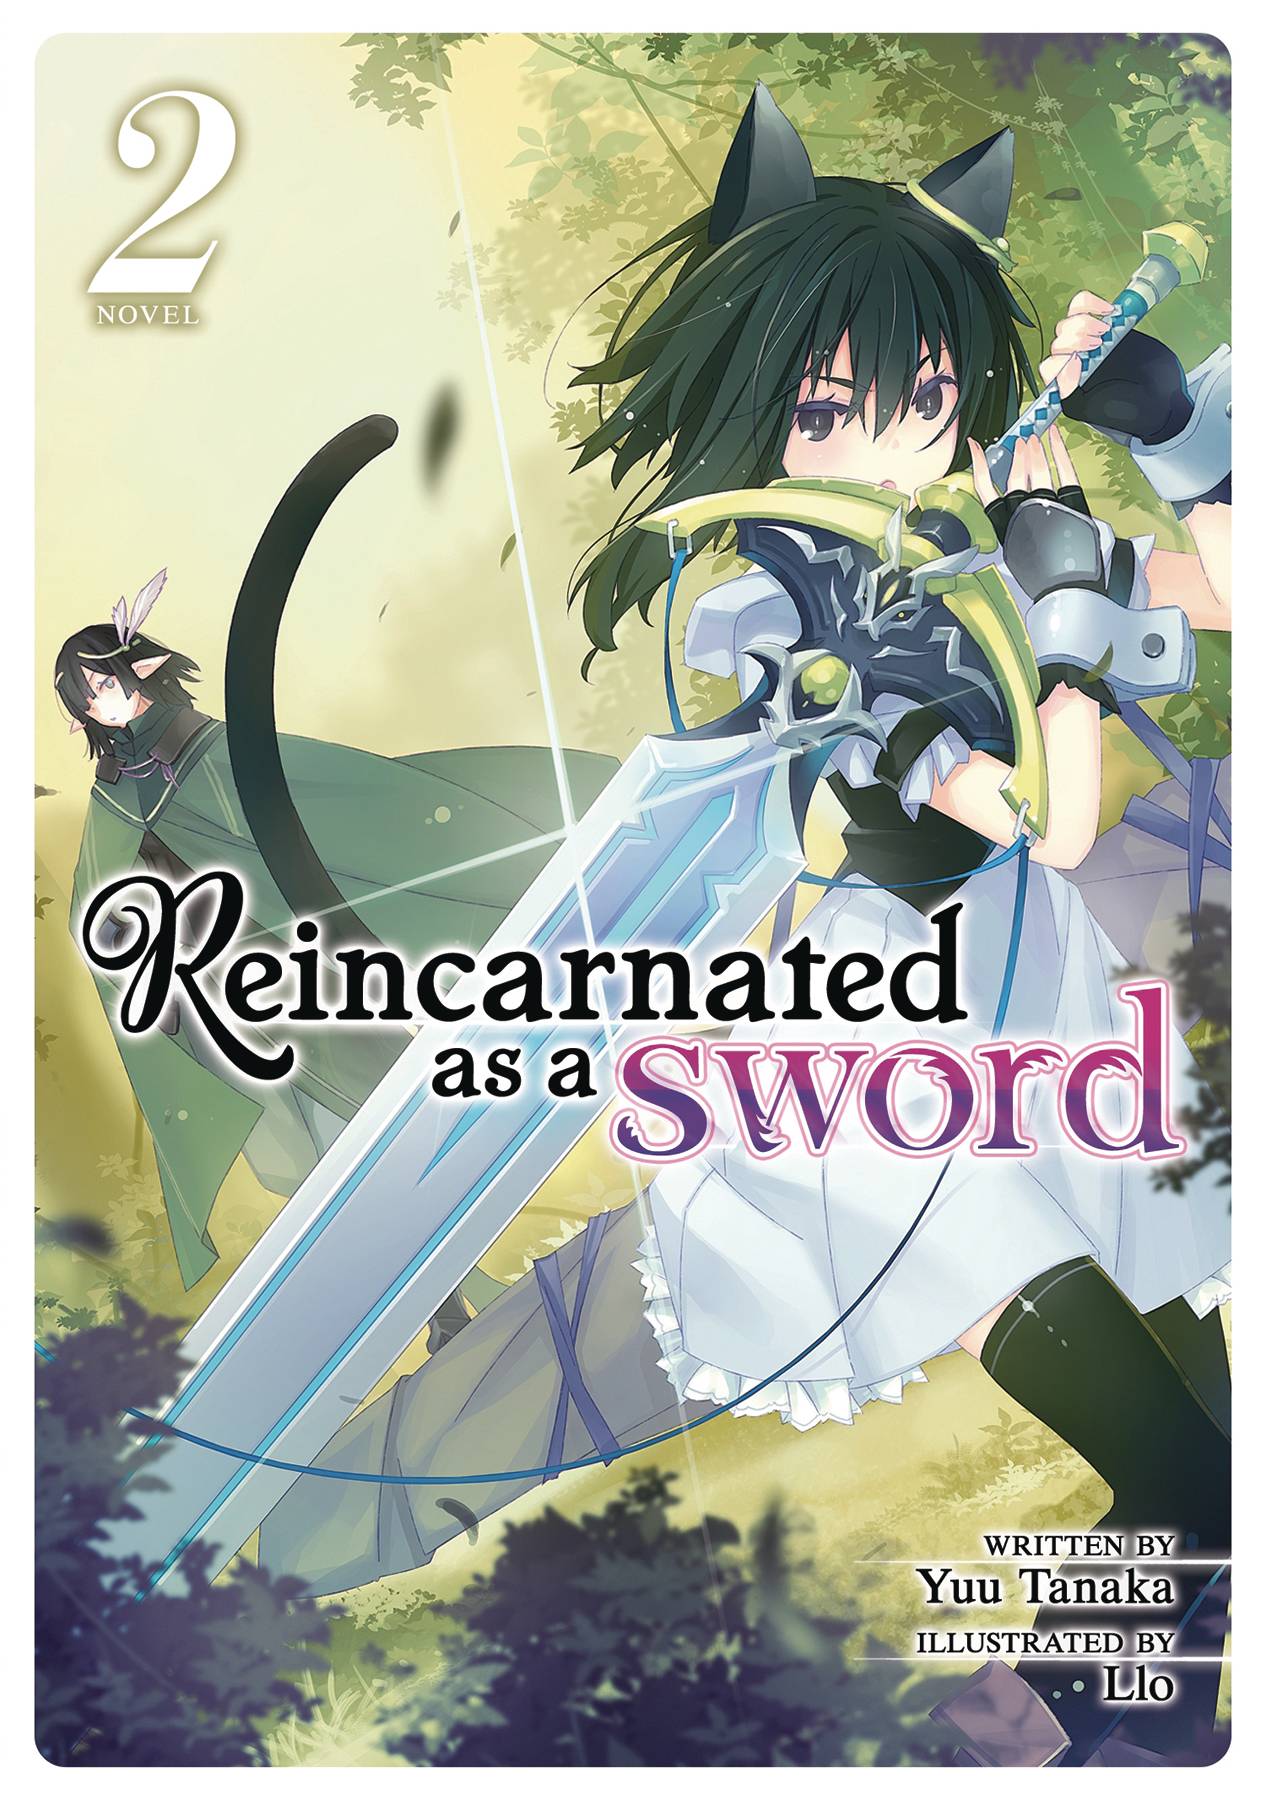 Isekai Light Novel Reincarnated as a Sword Anime Adaption Announced